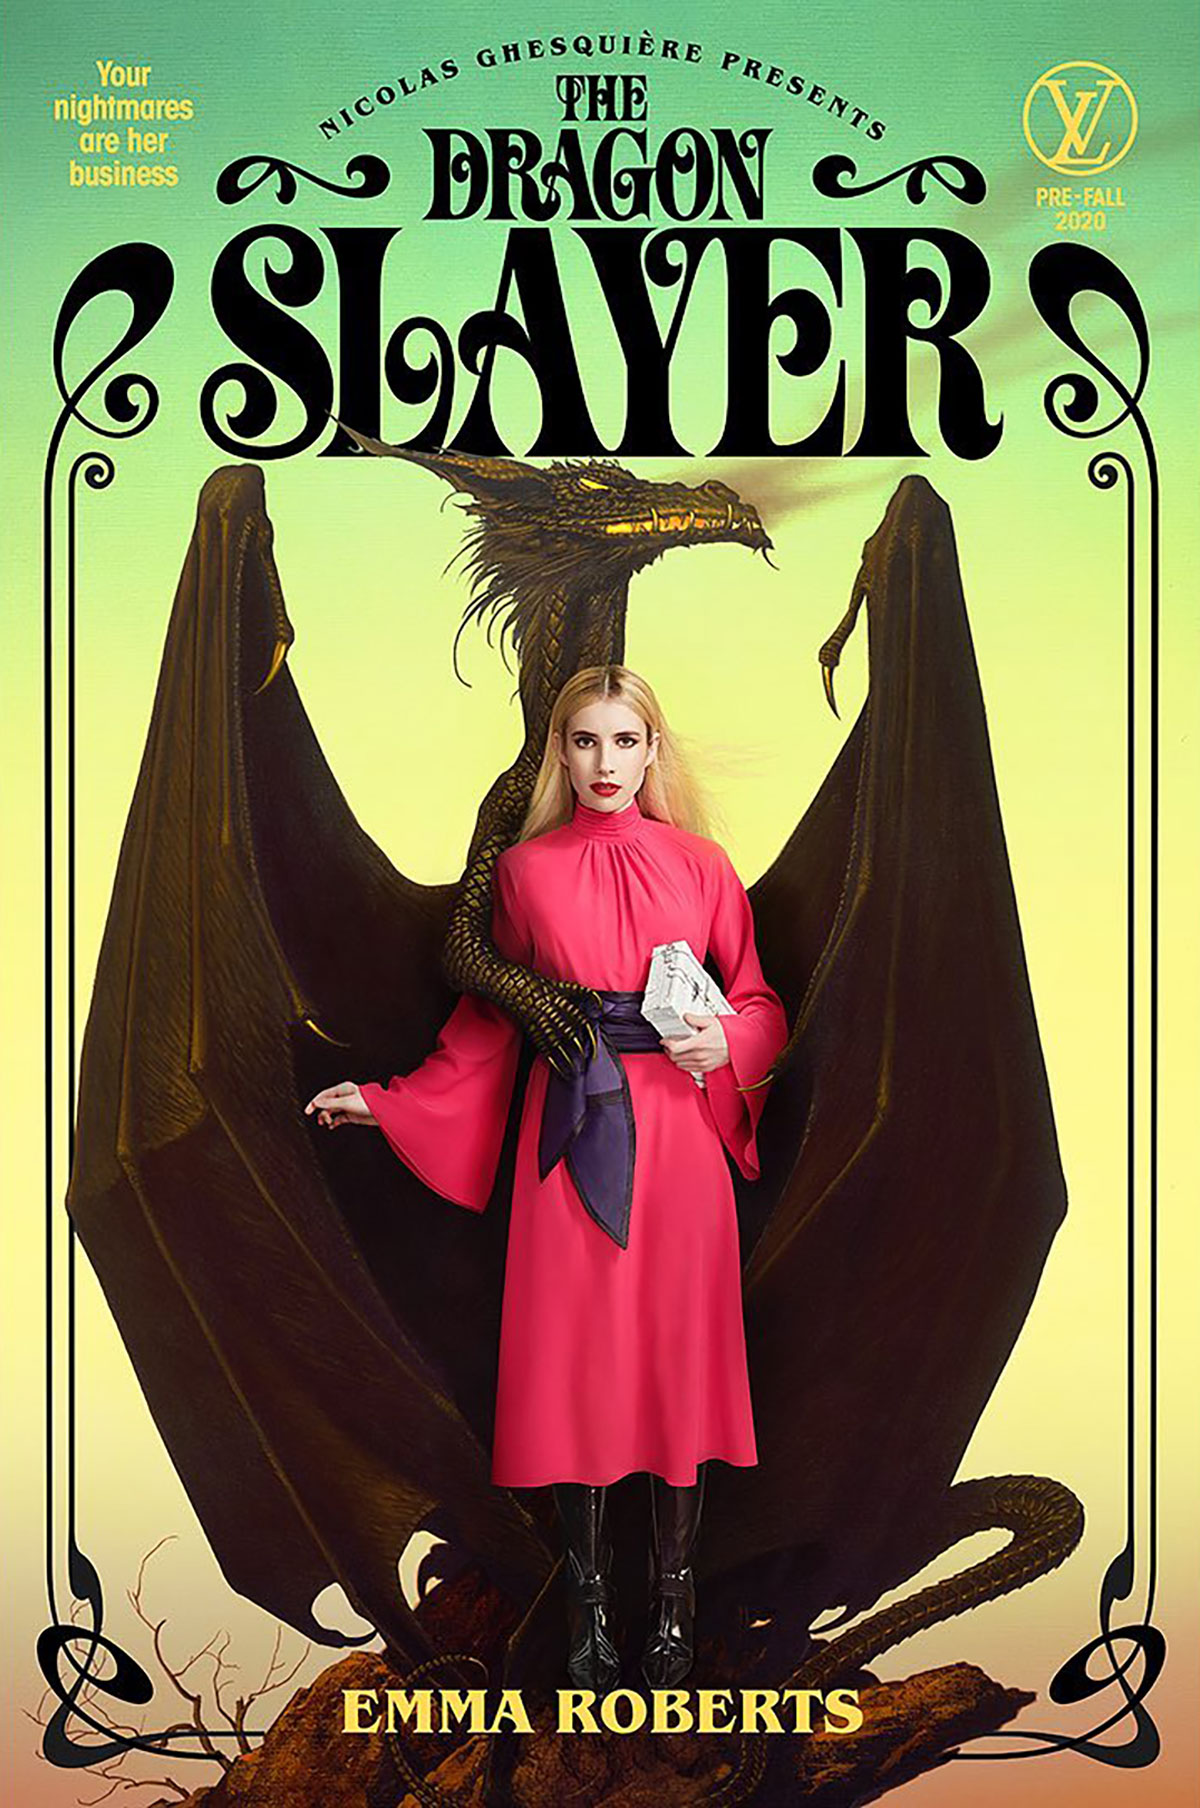 Dragonslayer - 1981 - Movie Poster